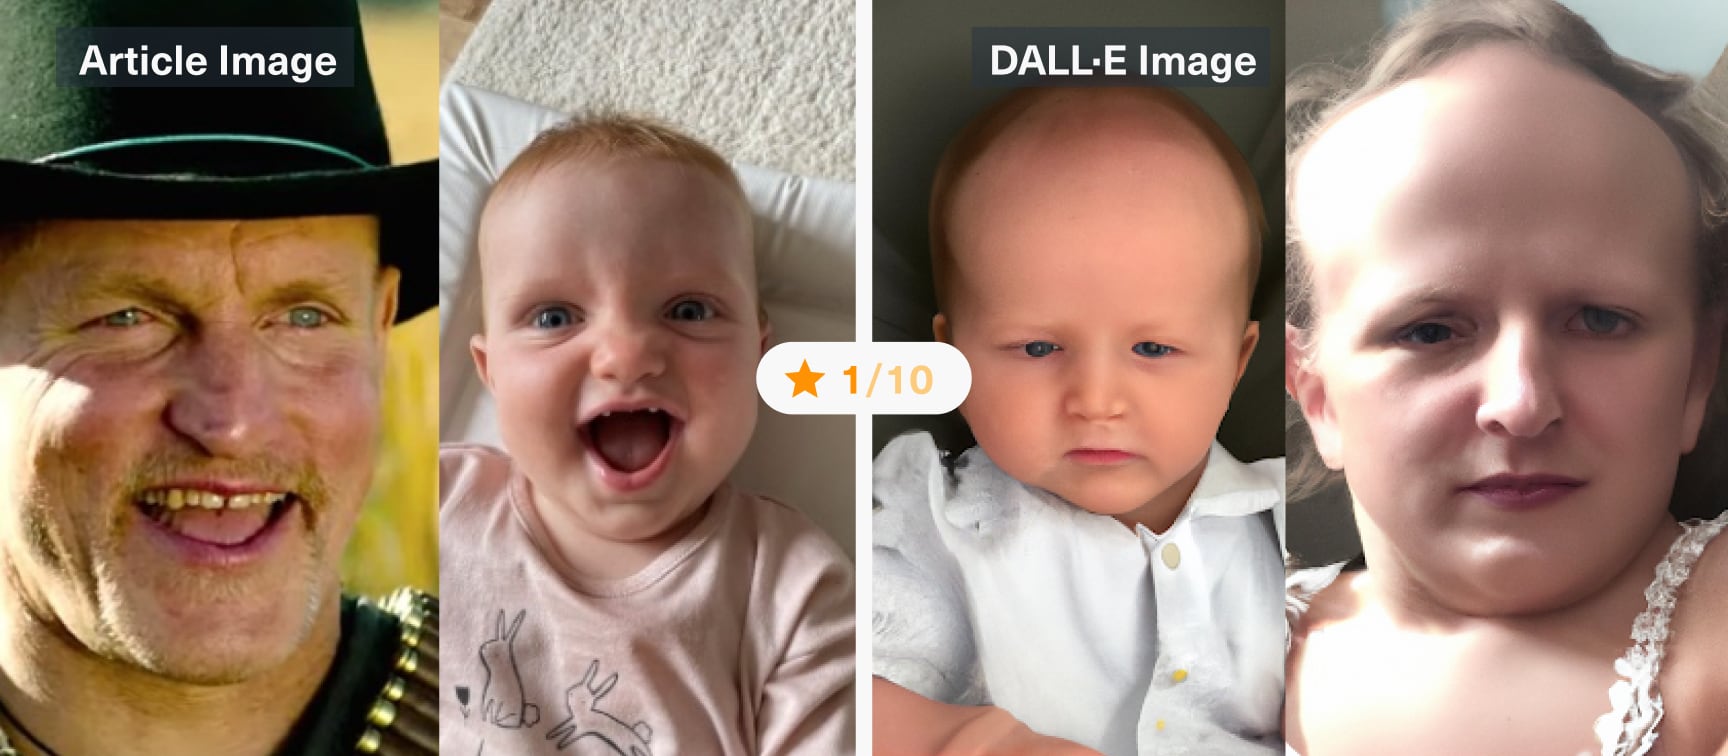 DALL-E meets News API: “Mom posts photo of baby girl who looks like Woody Harrelson”